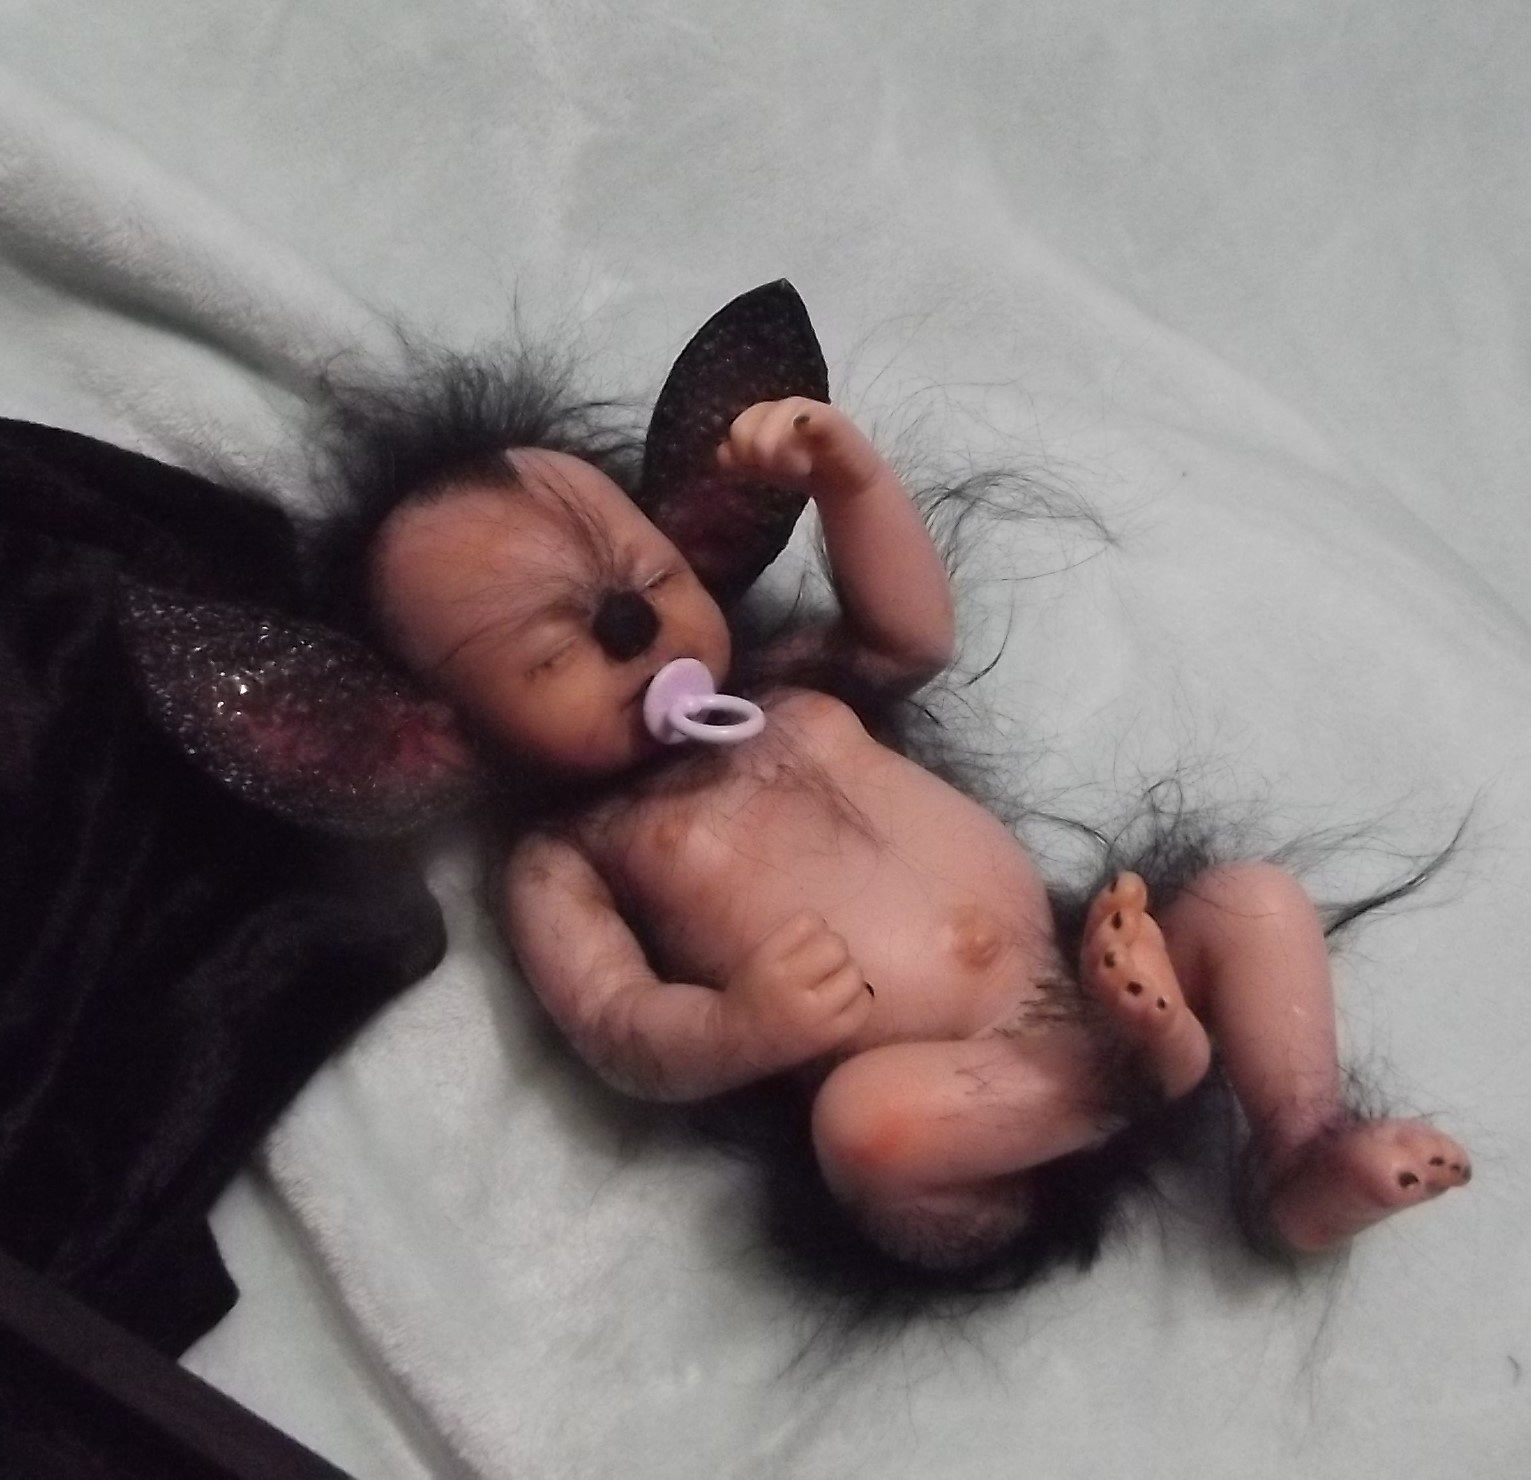 baby vampire doll